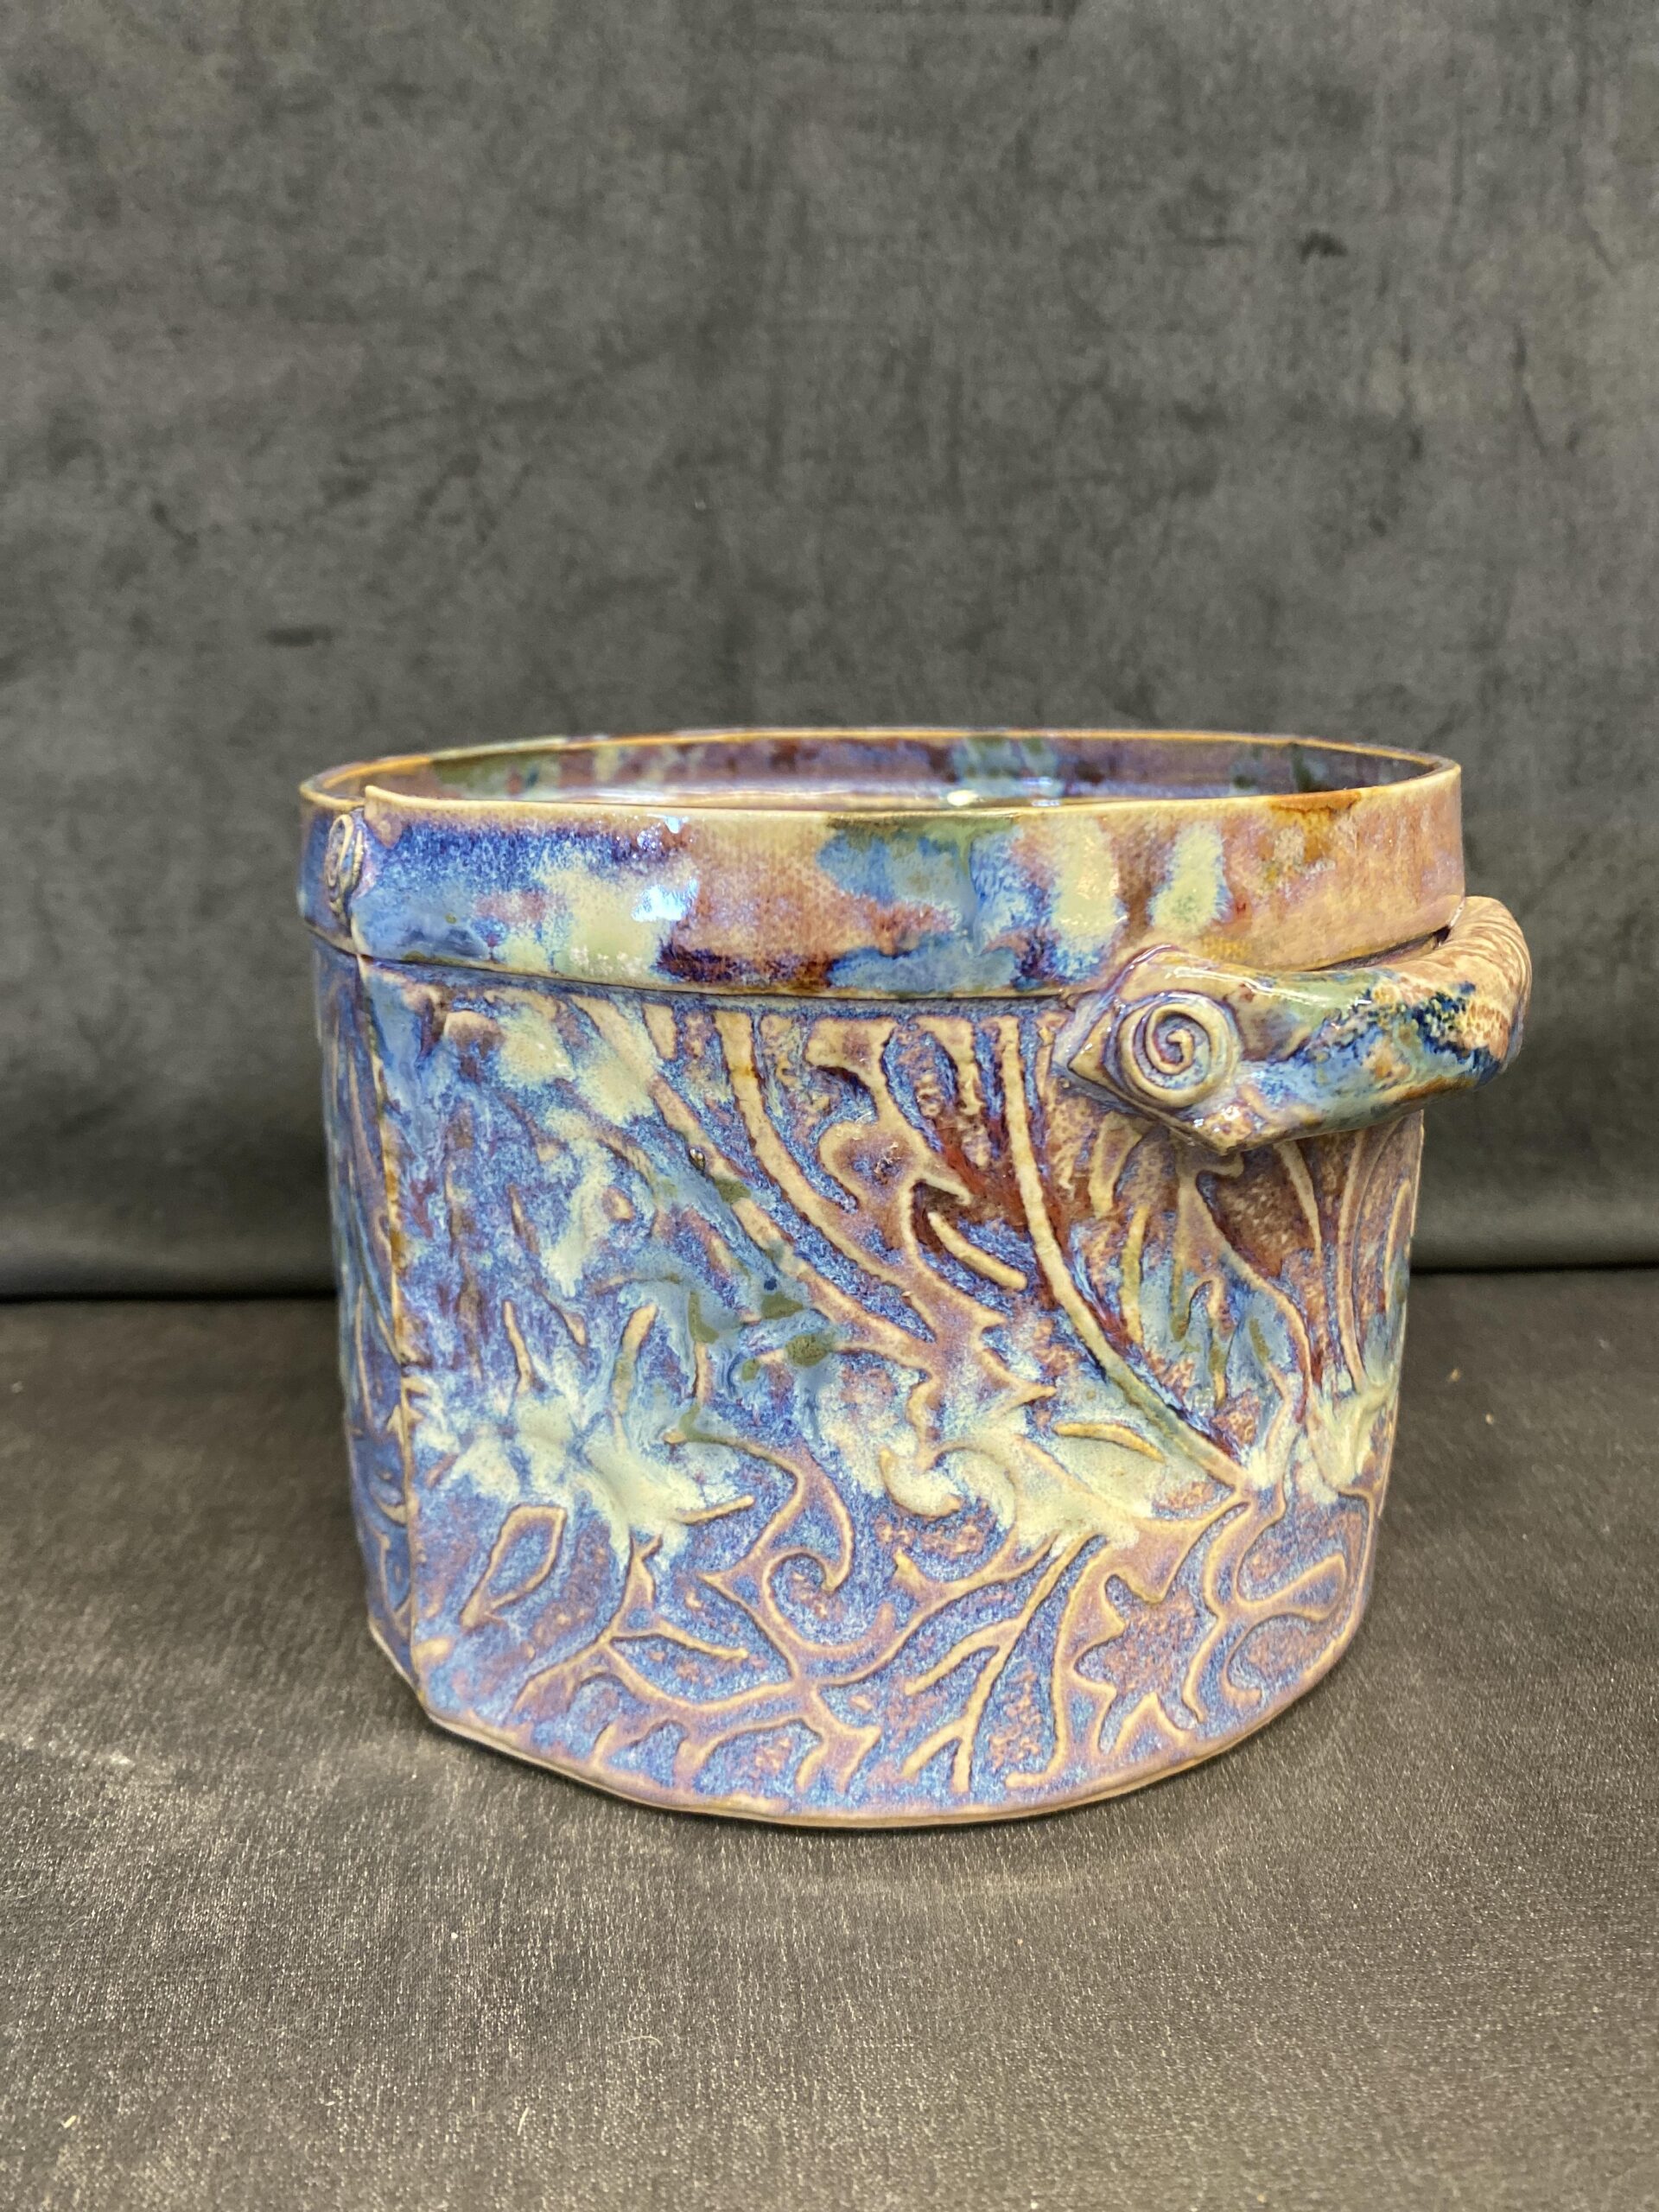 Studio Pottery Planter – Blue